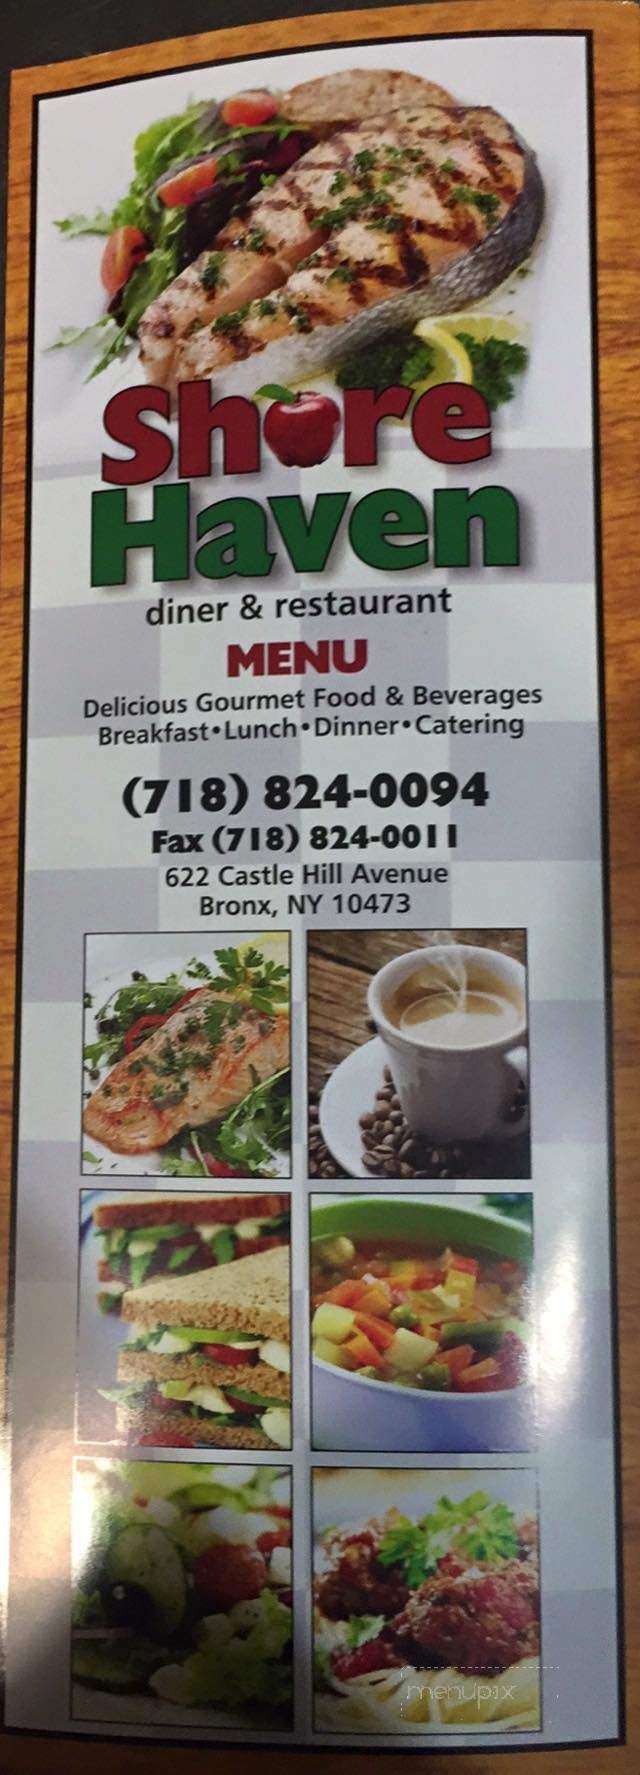 Shore Haven Diner - Bronx, NY